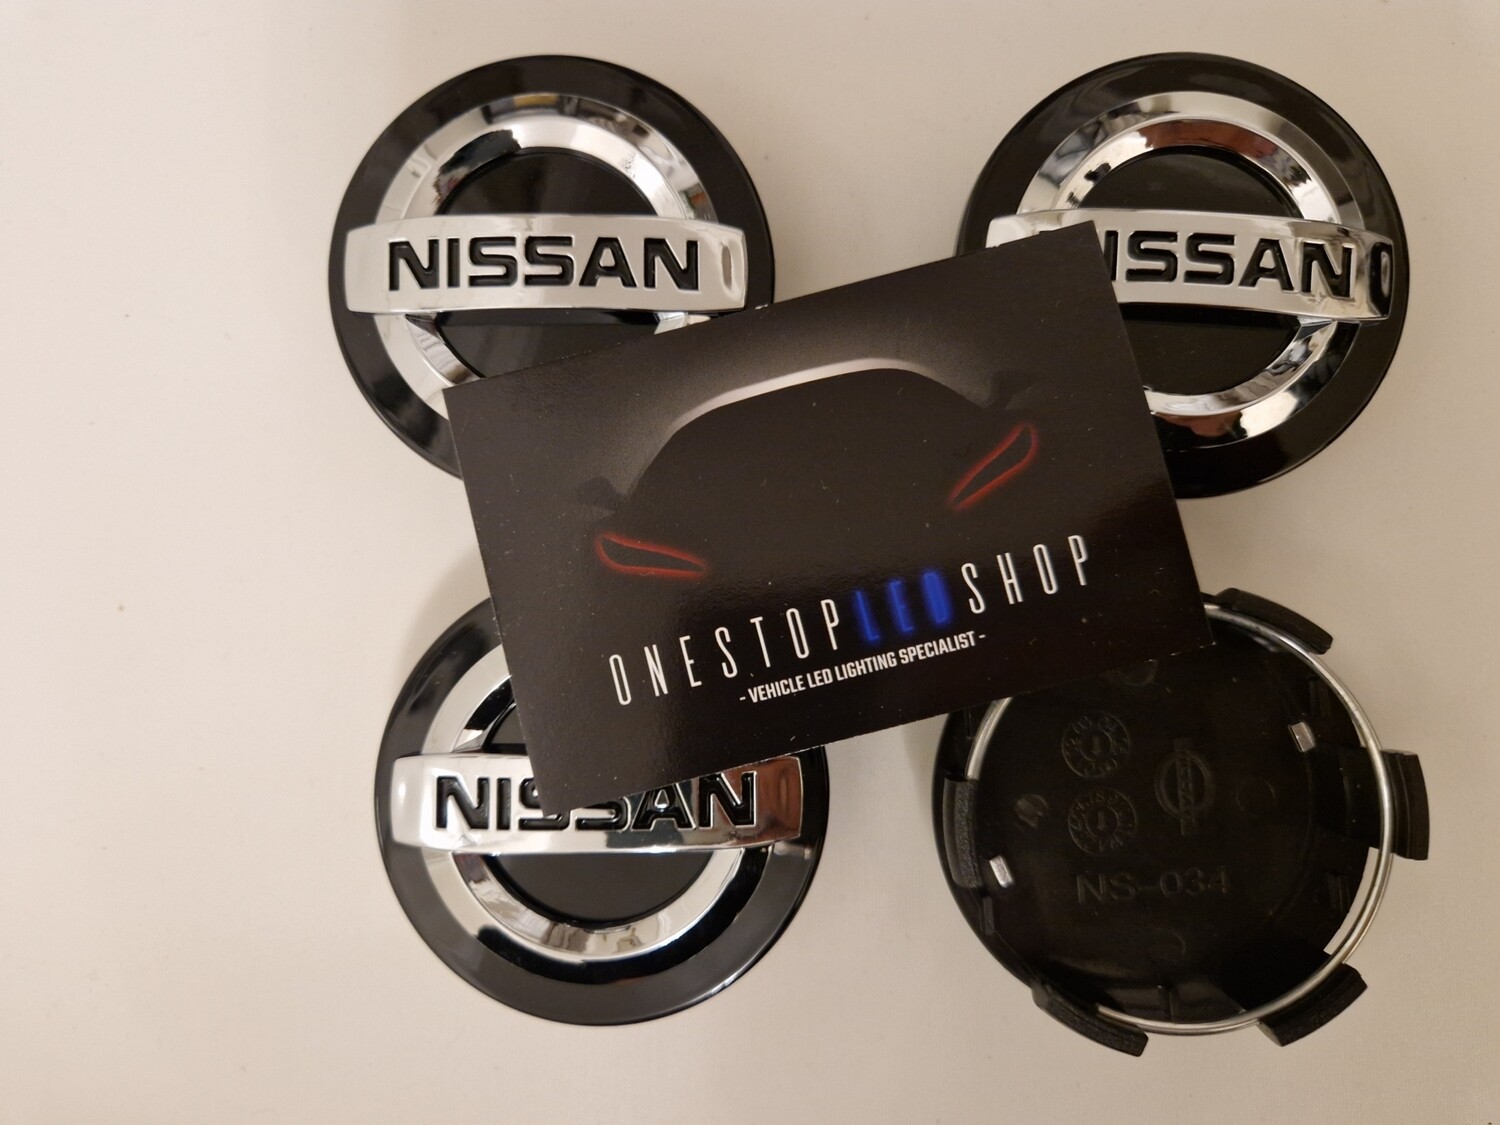 4 X Nissan black 60mm Alloy wheel center hub caps